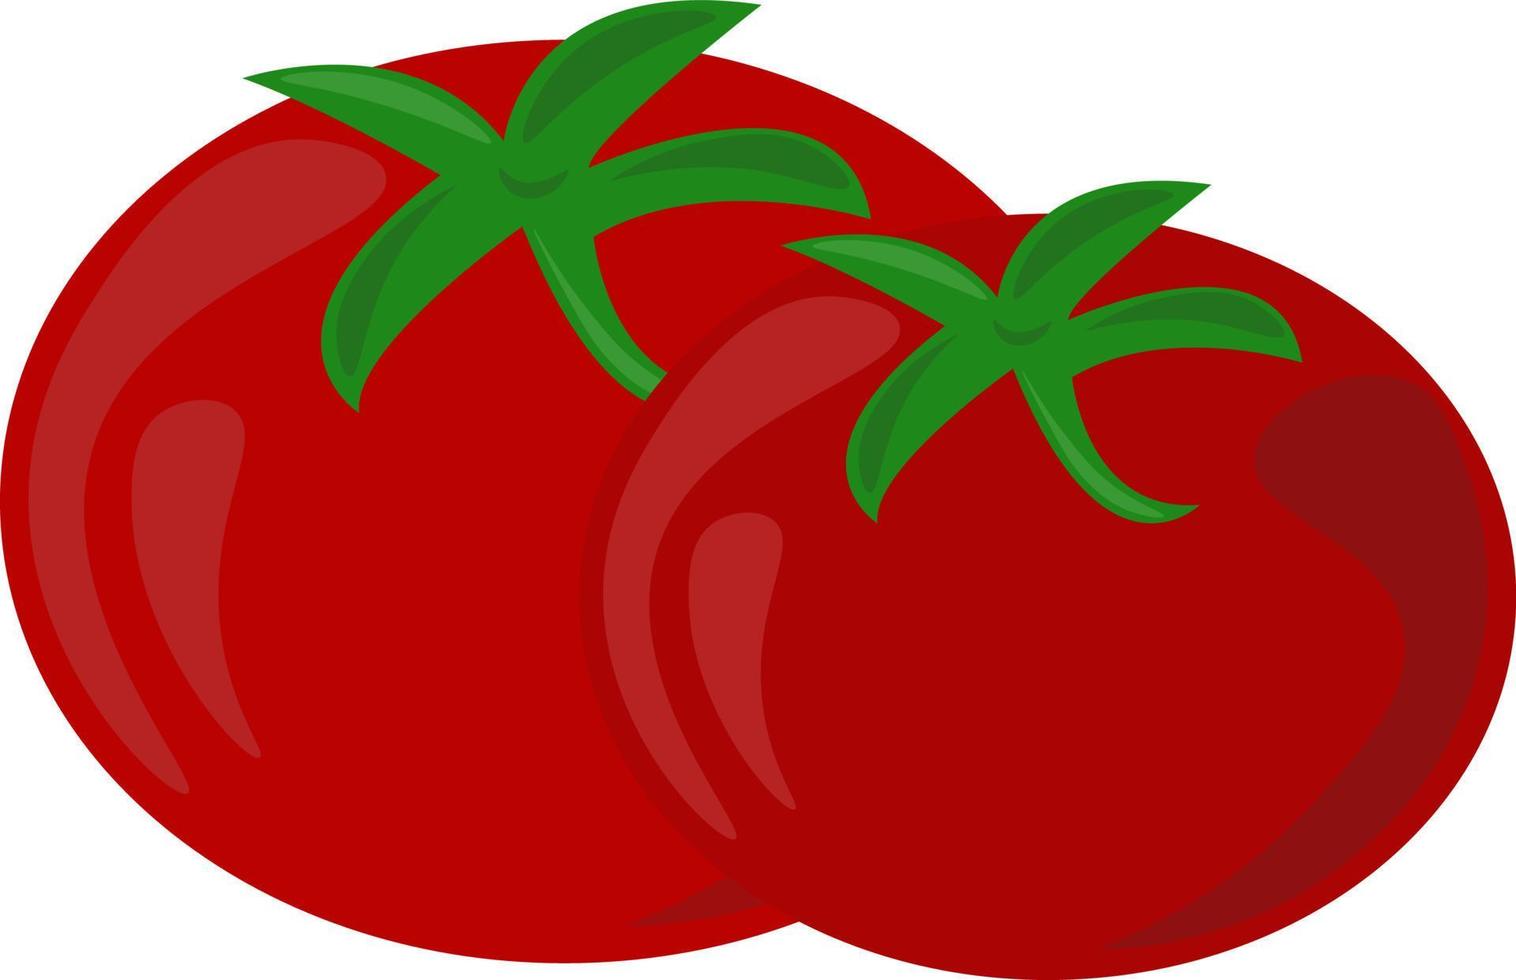 Fresh tomatoes, illustration, vector on white background.